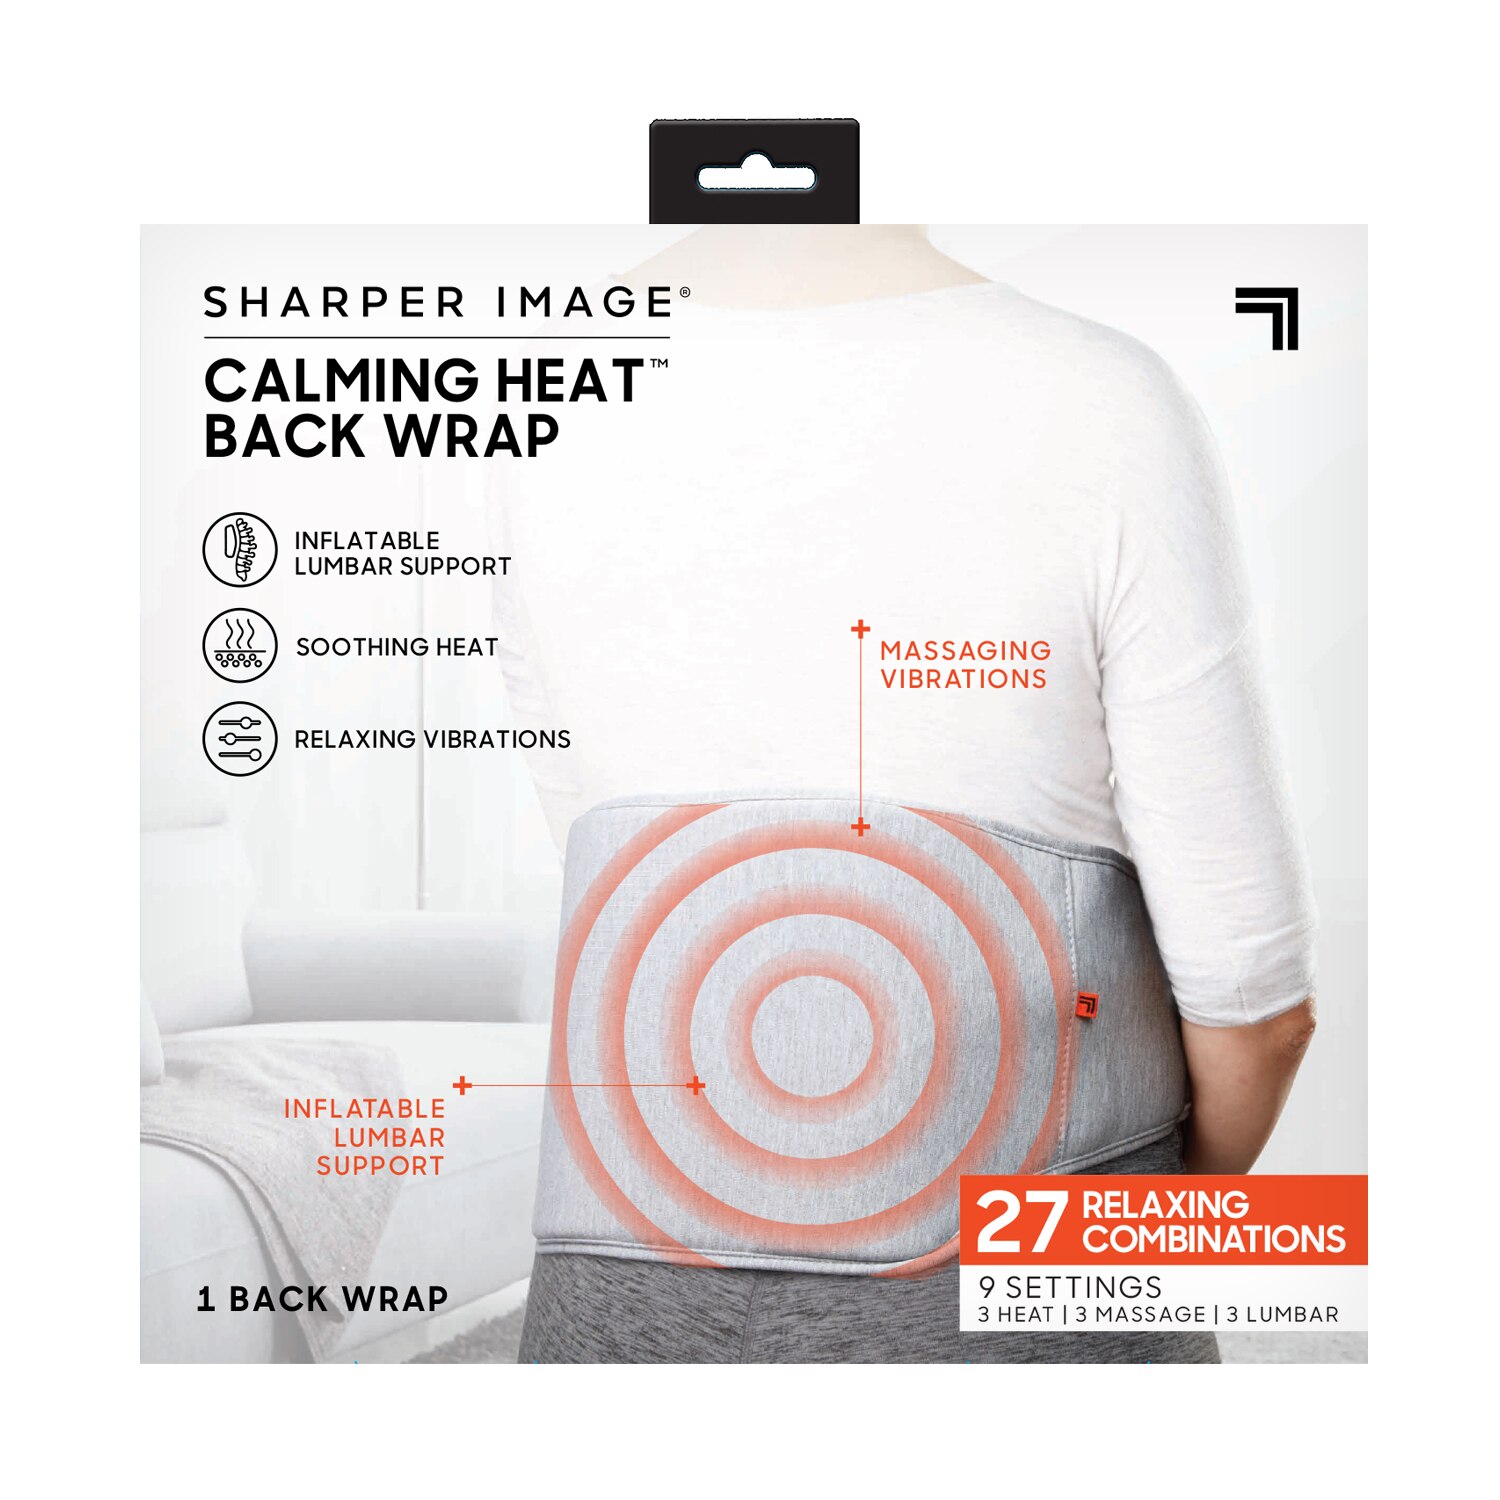 Customer Reviews: Sharper Image Calming Heat Back Pad - CVS Pharmacy